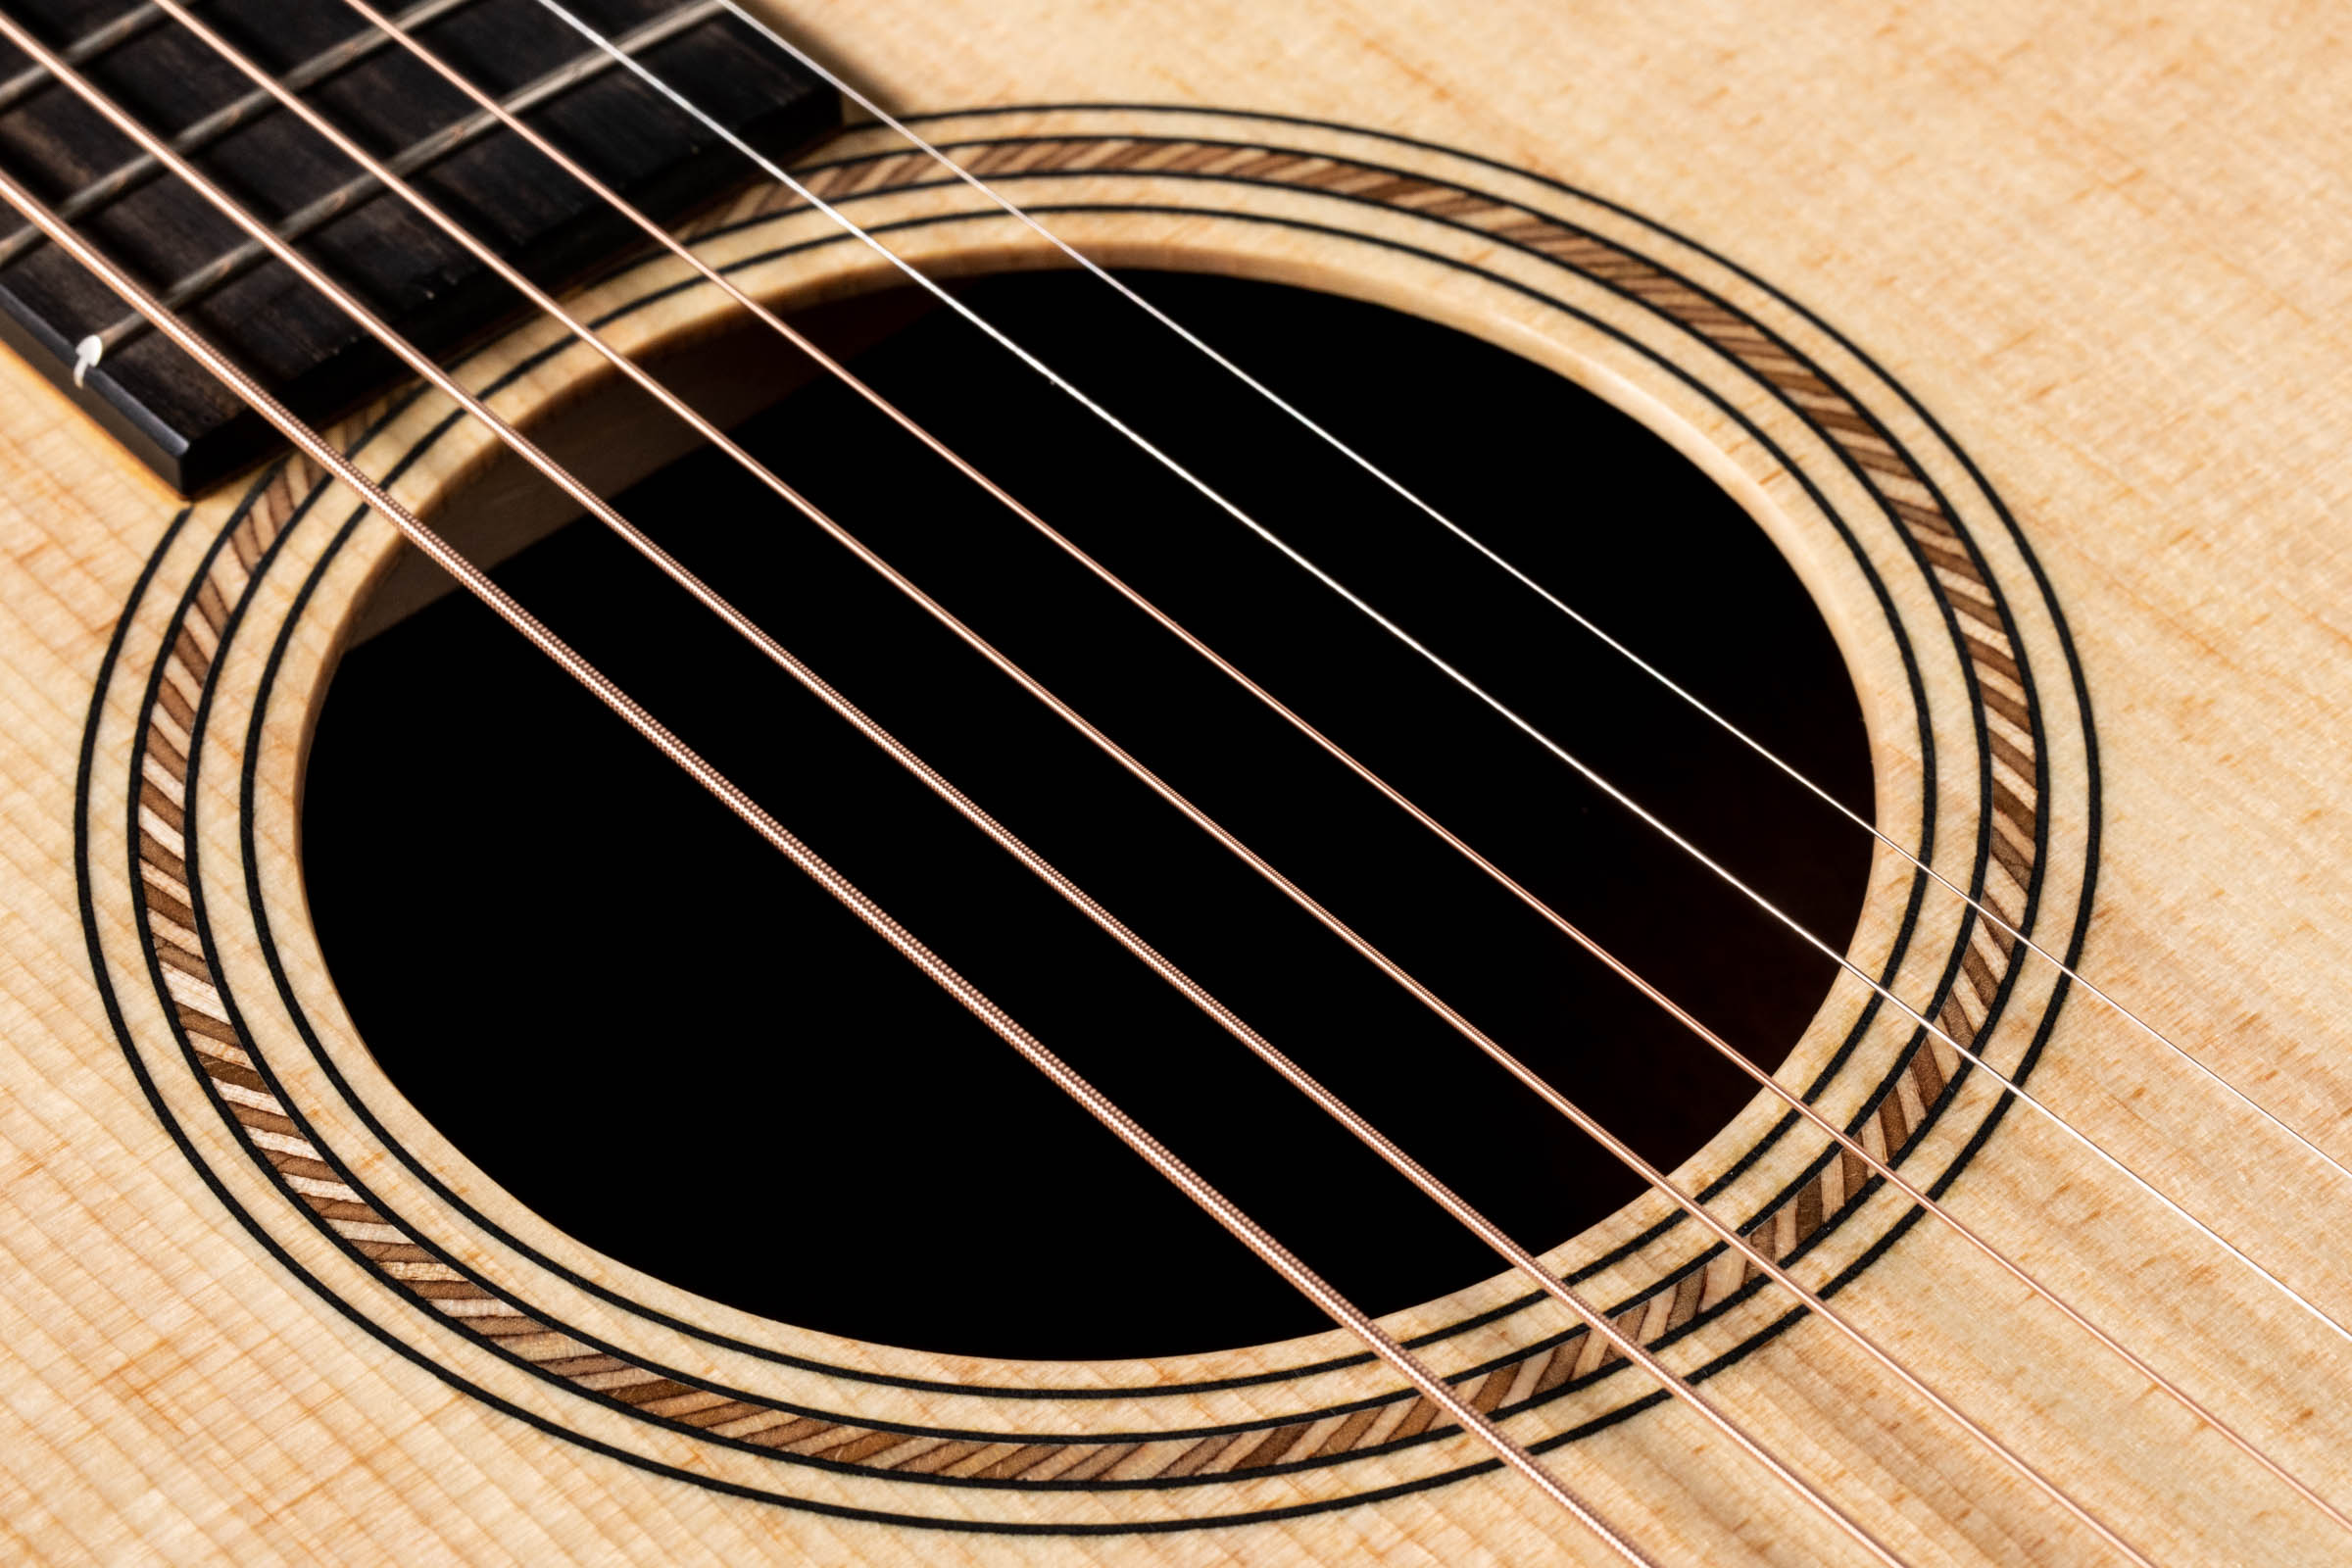 Academy 10e Layered Sapele Acoustic-Electric Guitar | Taylor Guitars